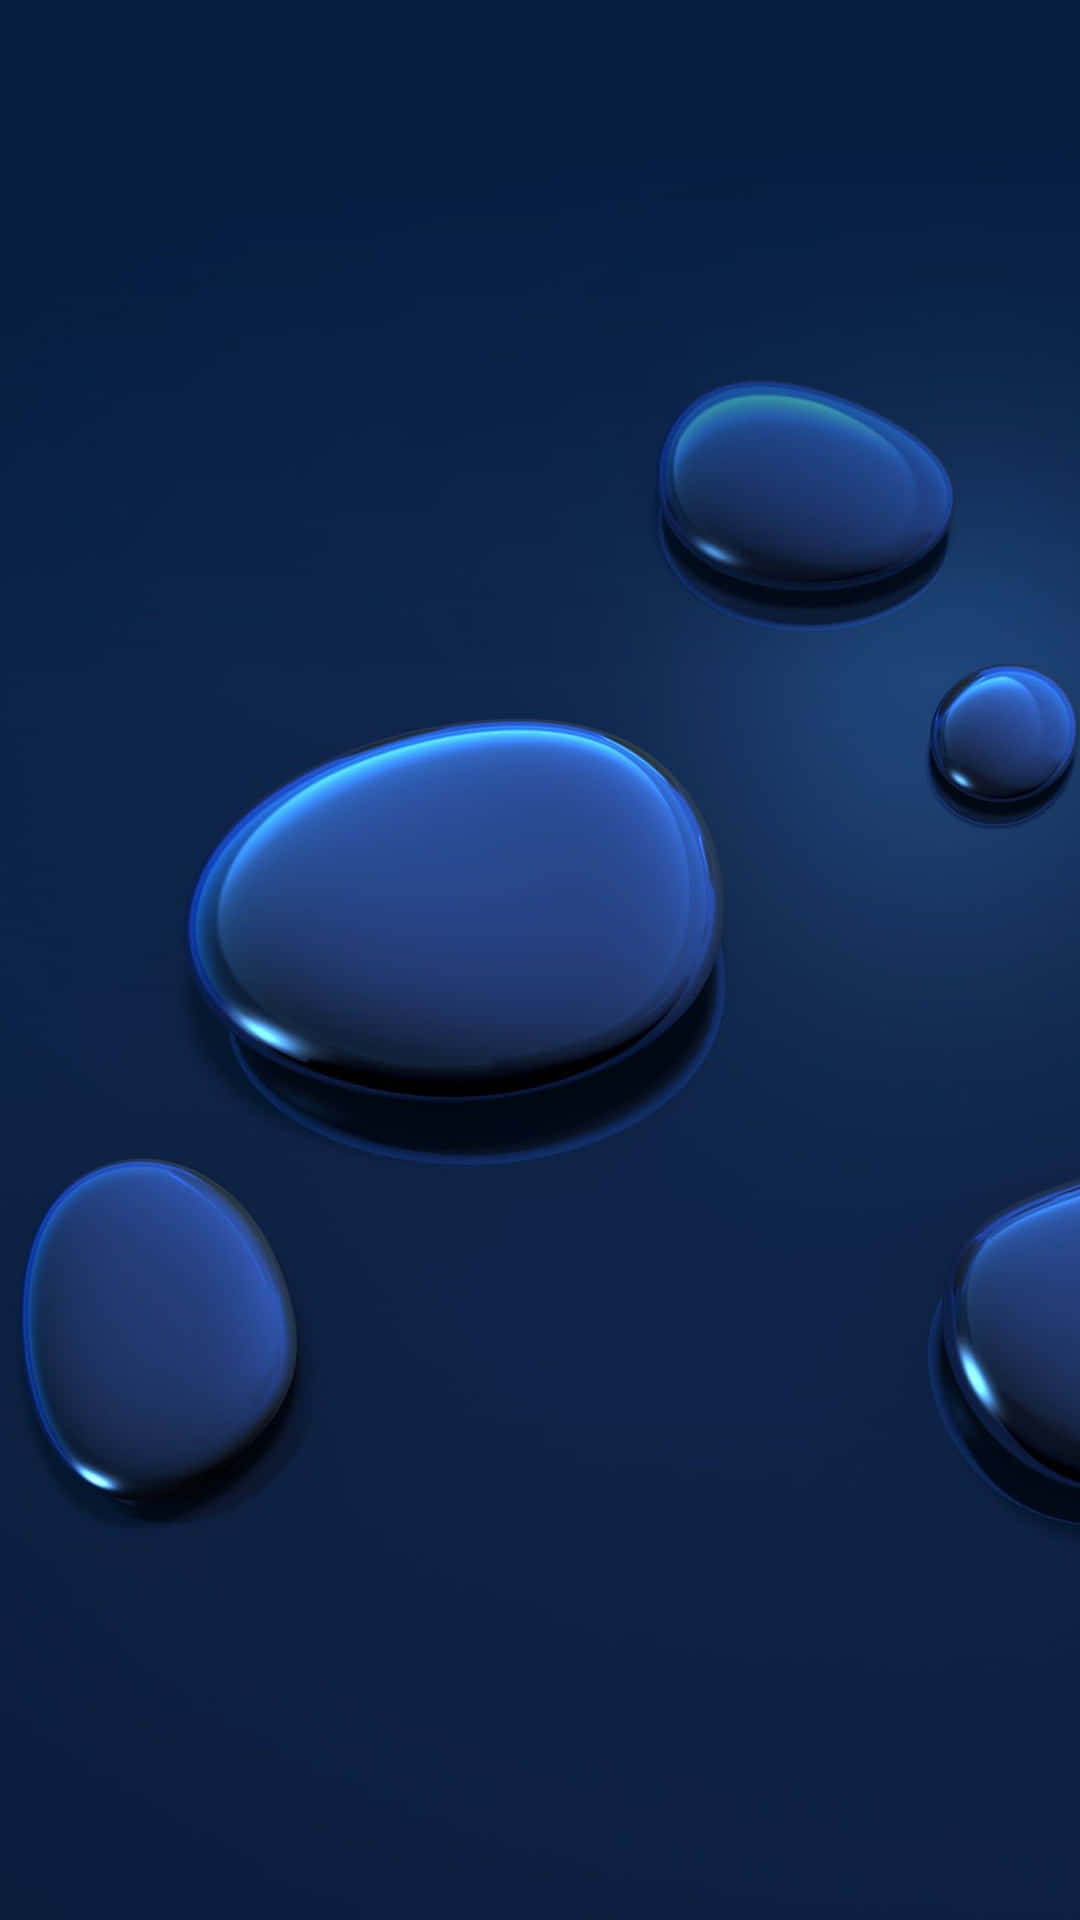 Blue Water Dropletson Dark Surface Wallpaper